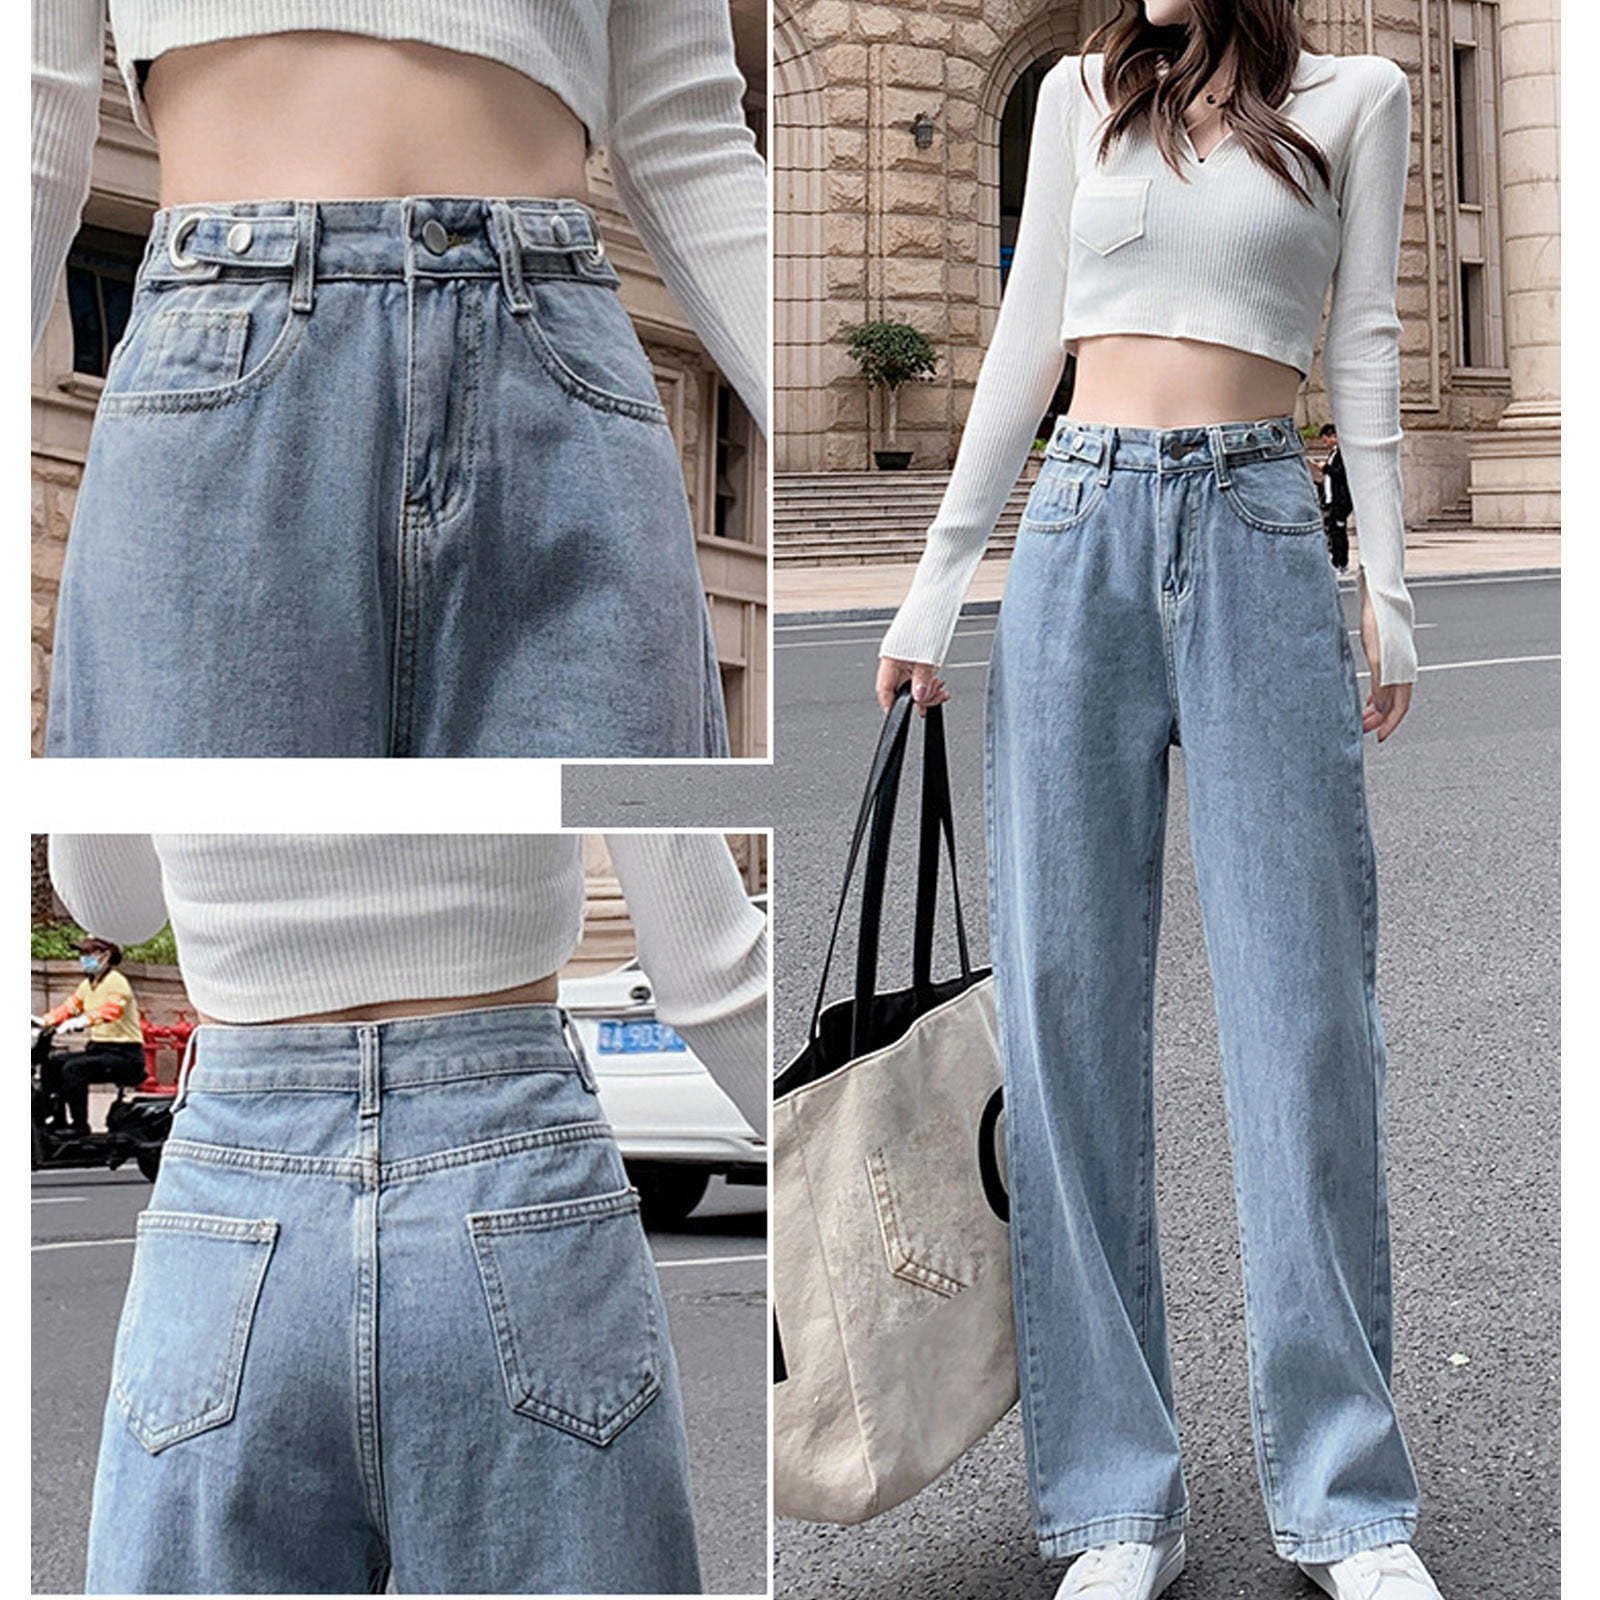 Breniney High Idolize High Trousers Pocket Waist Elastic Pants Jeans Denim  Hole Loose Women's Jeans